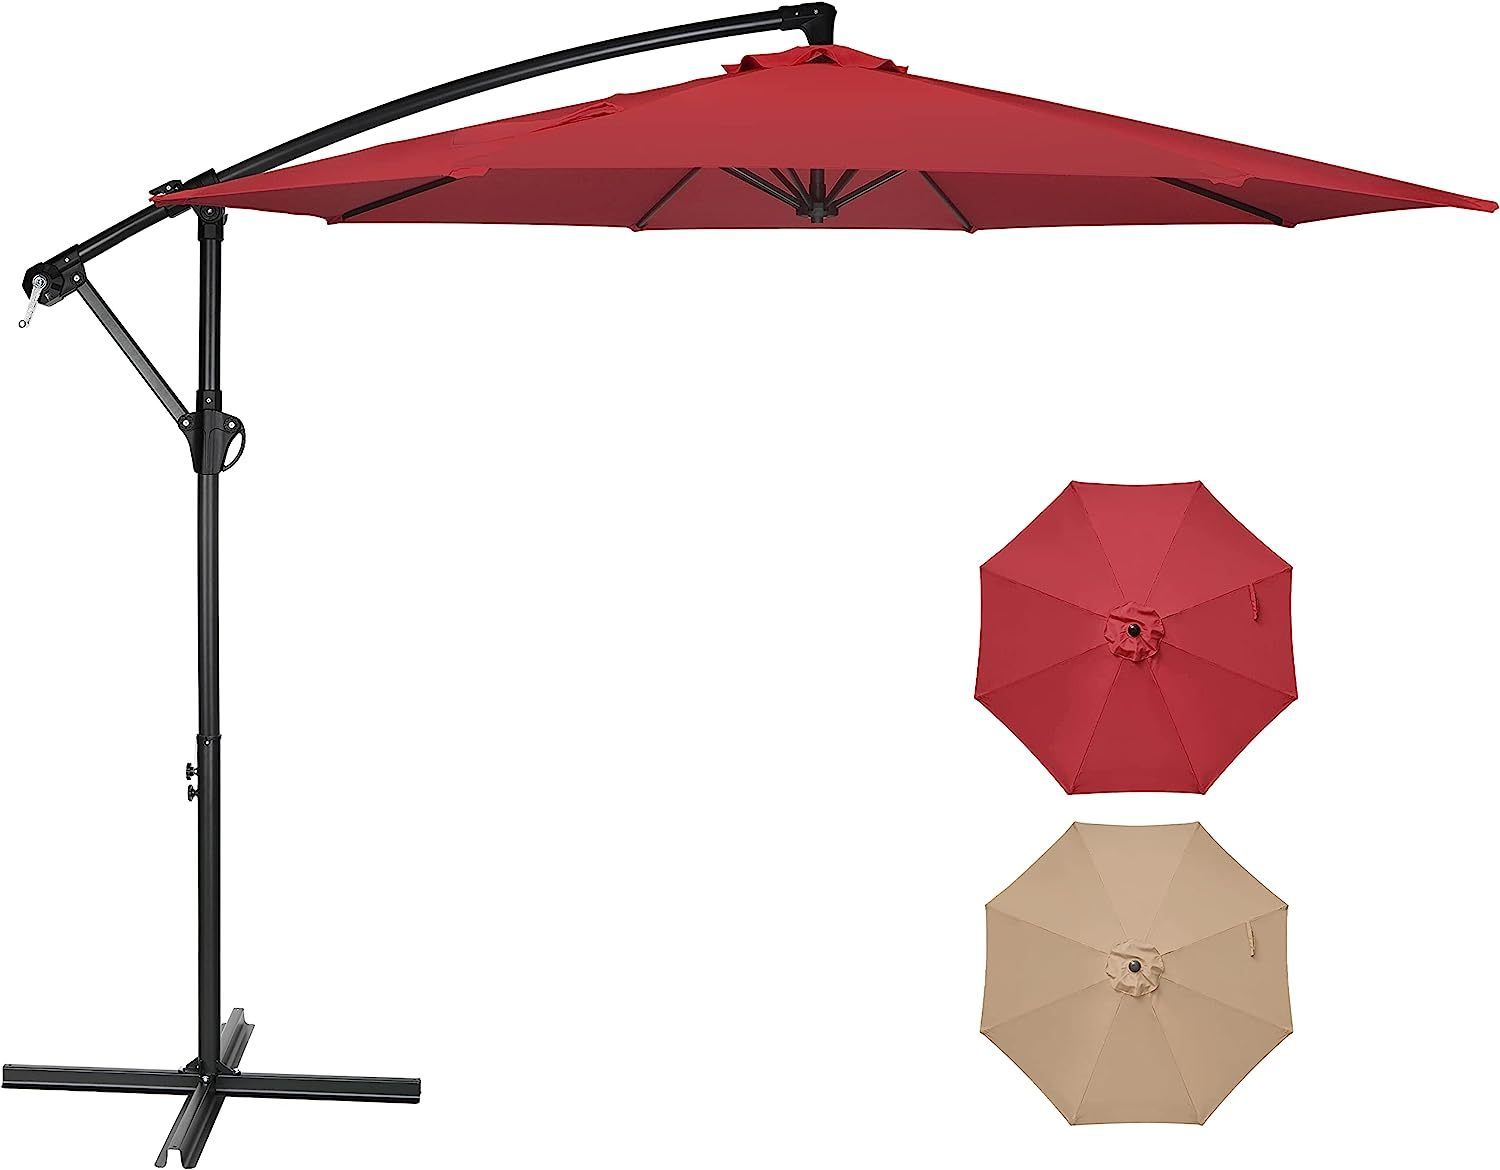 10ft-Offset-Umbrella-Cantilever-Patio-Hanging-Umbrella-Outdoor-Market-Umbrella-with-Crank-&-Cross-Base-,-Red-Umbrellas-&-Sunshades